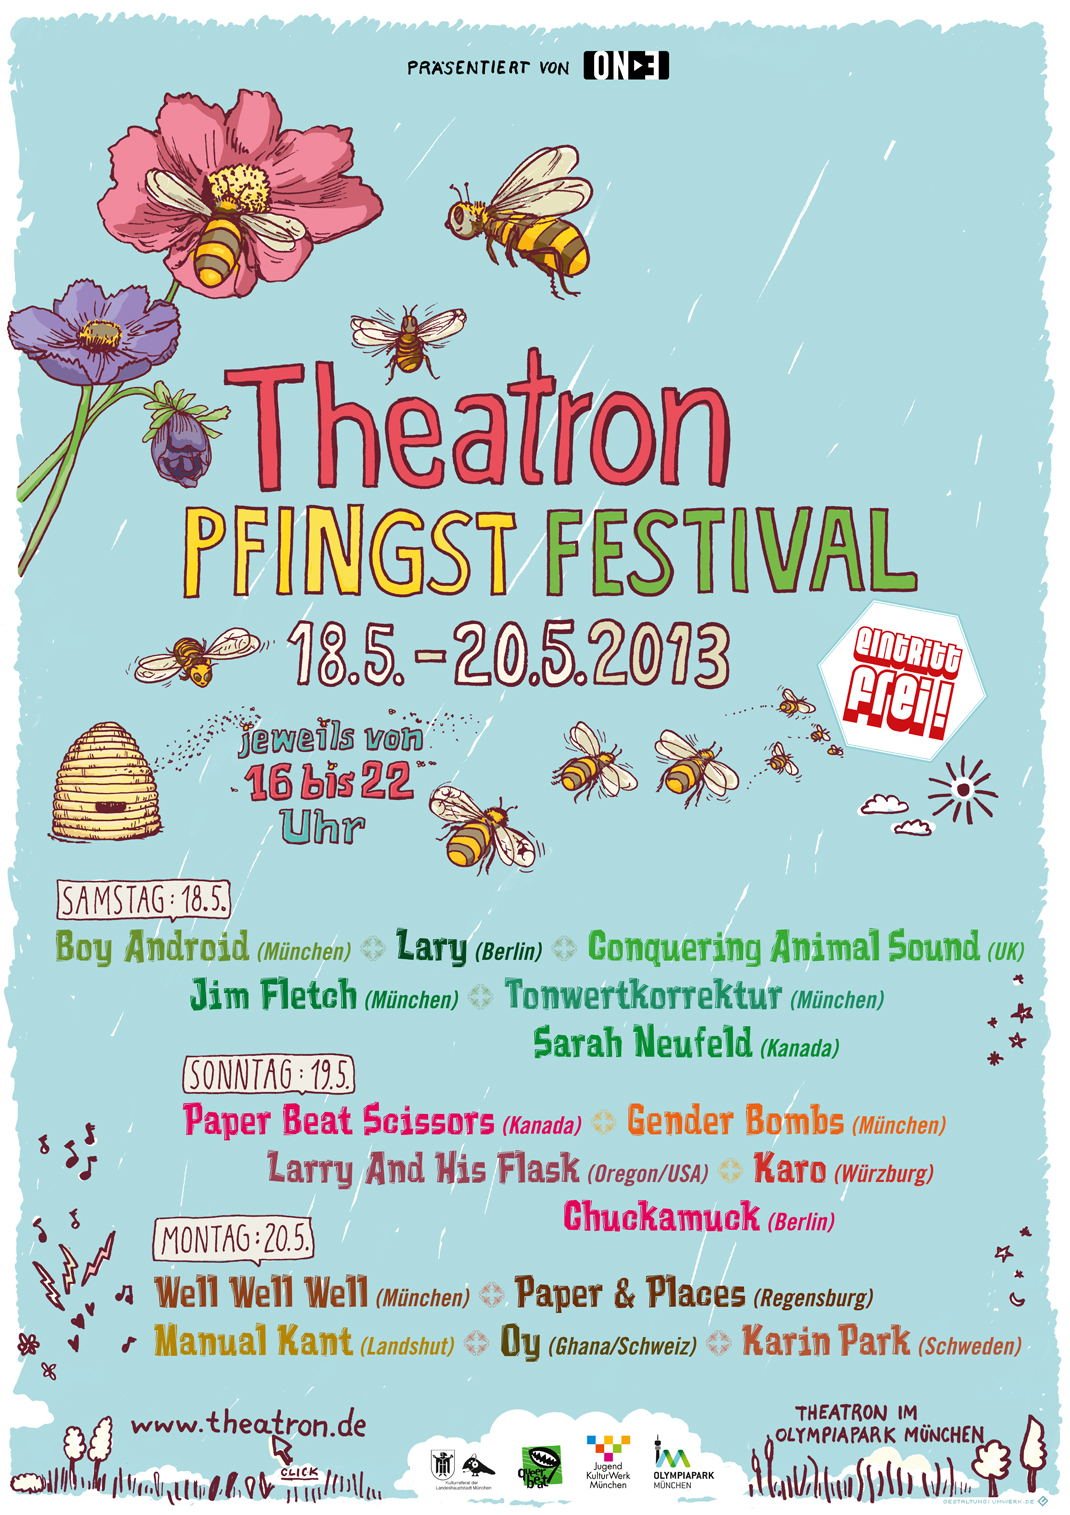 Pentecost Music Festival / Theatron Pfingstfestival 2013